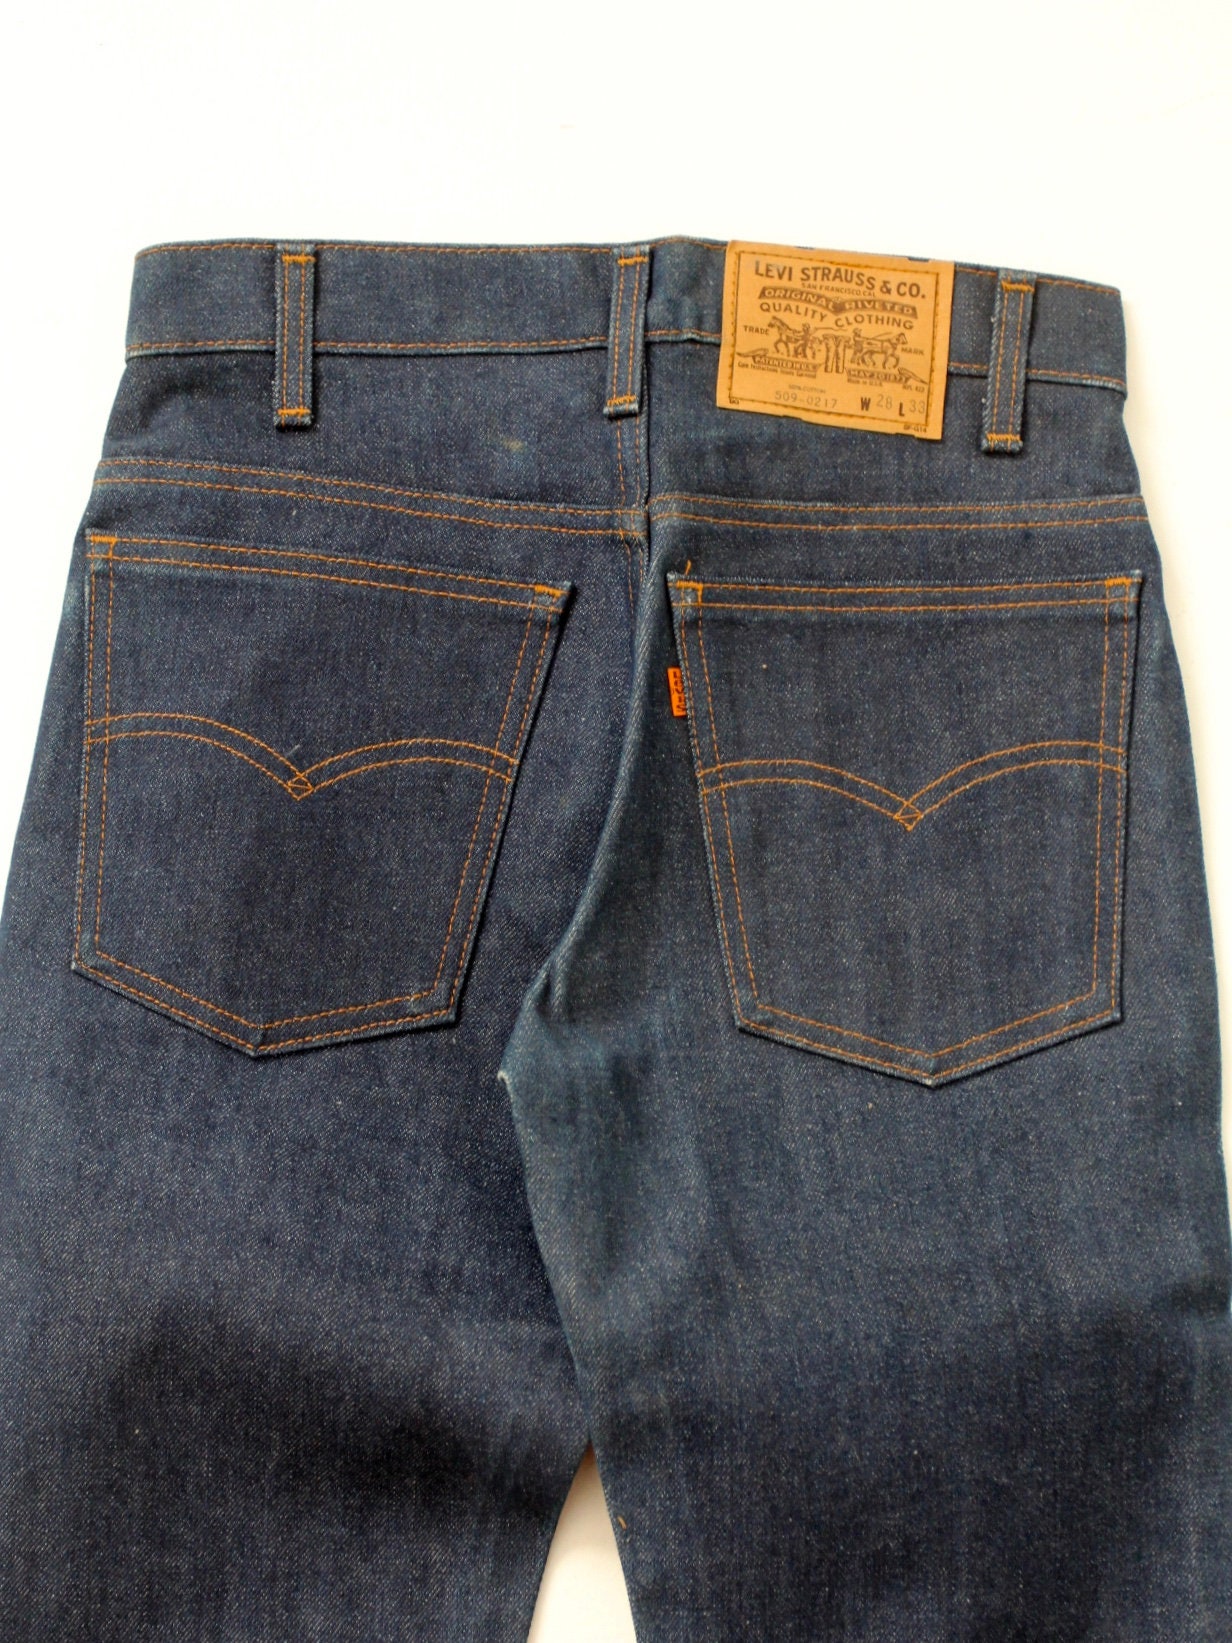 Vintage 70s Levis Jeans, Orange Tab Dark Wash Denim Jeans, 28 X 33 - Etsy